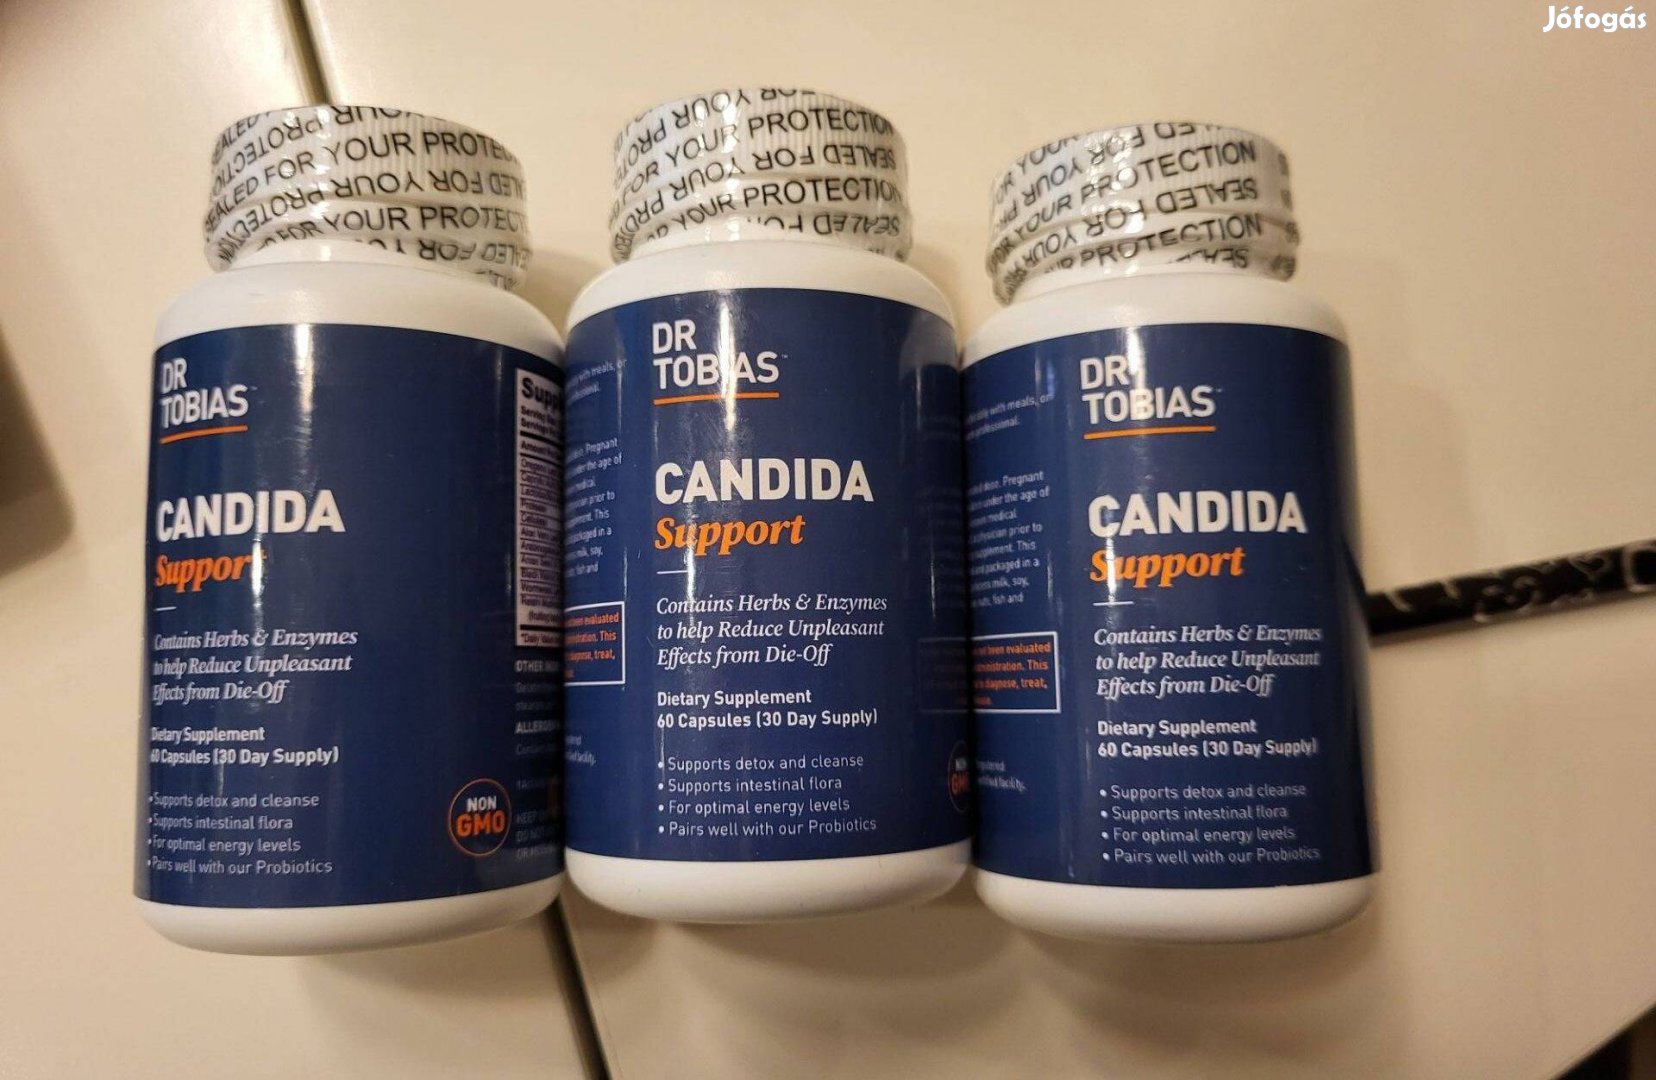 Dr Tobias Candida Vitamin